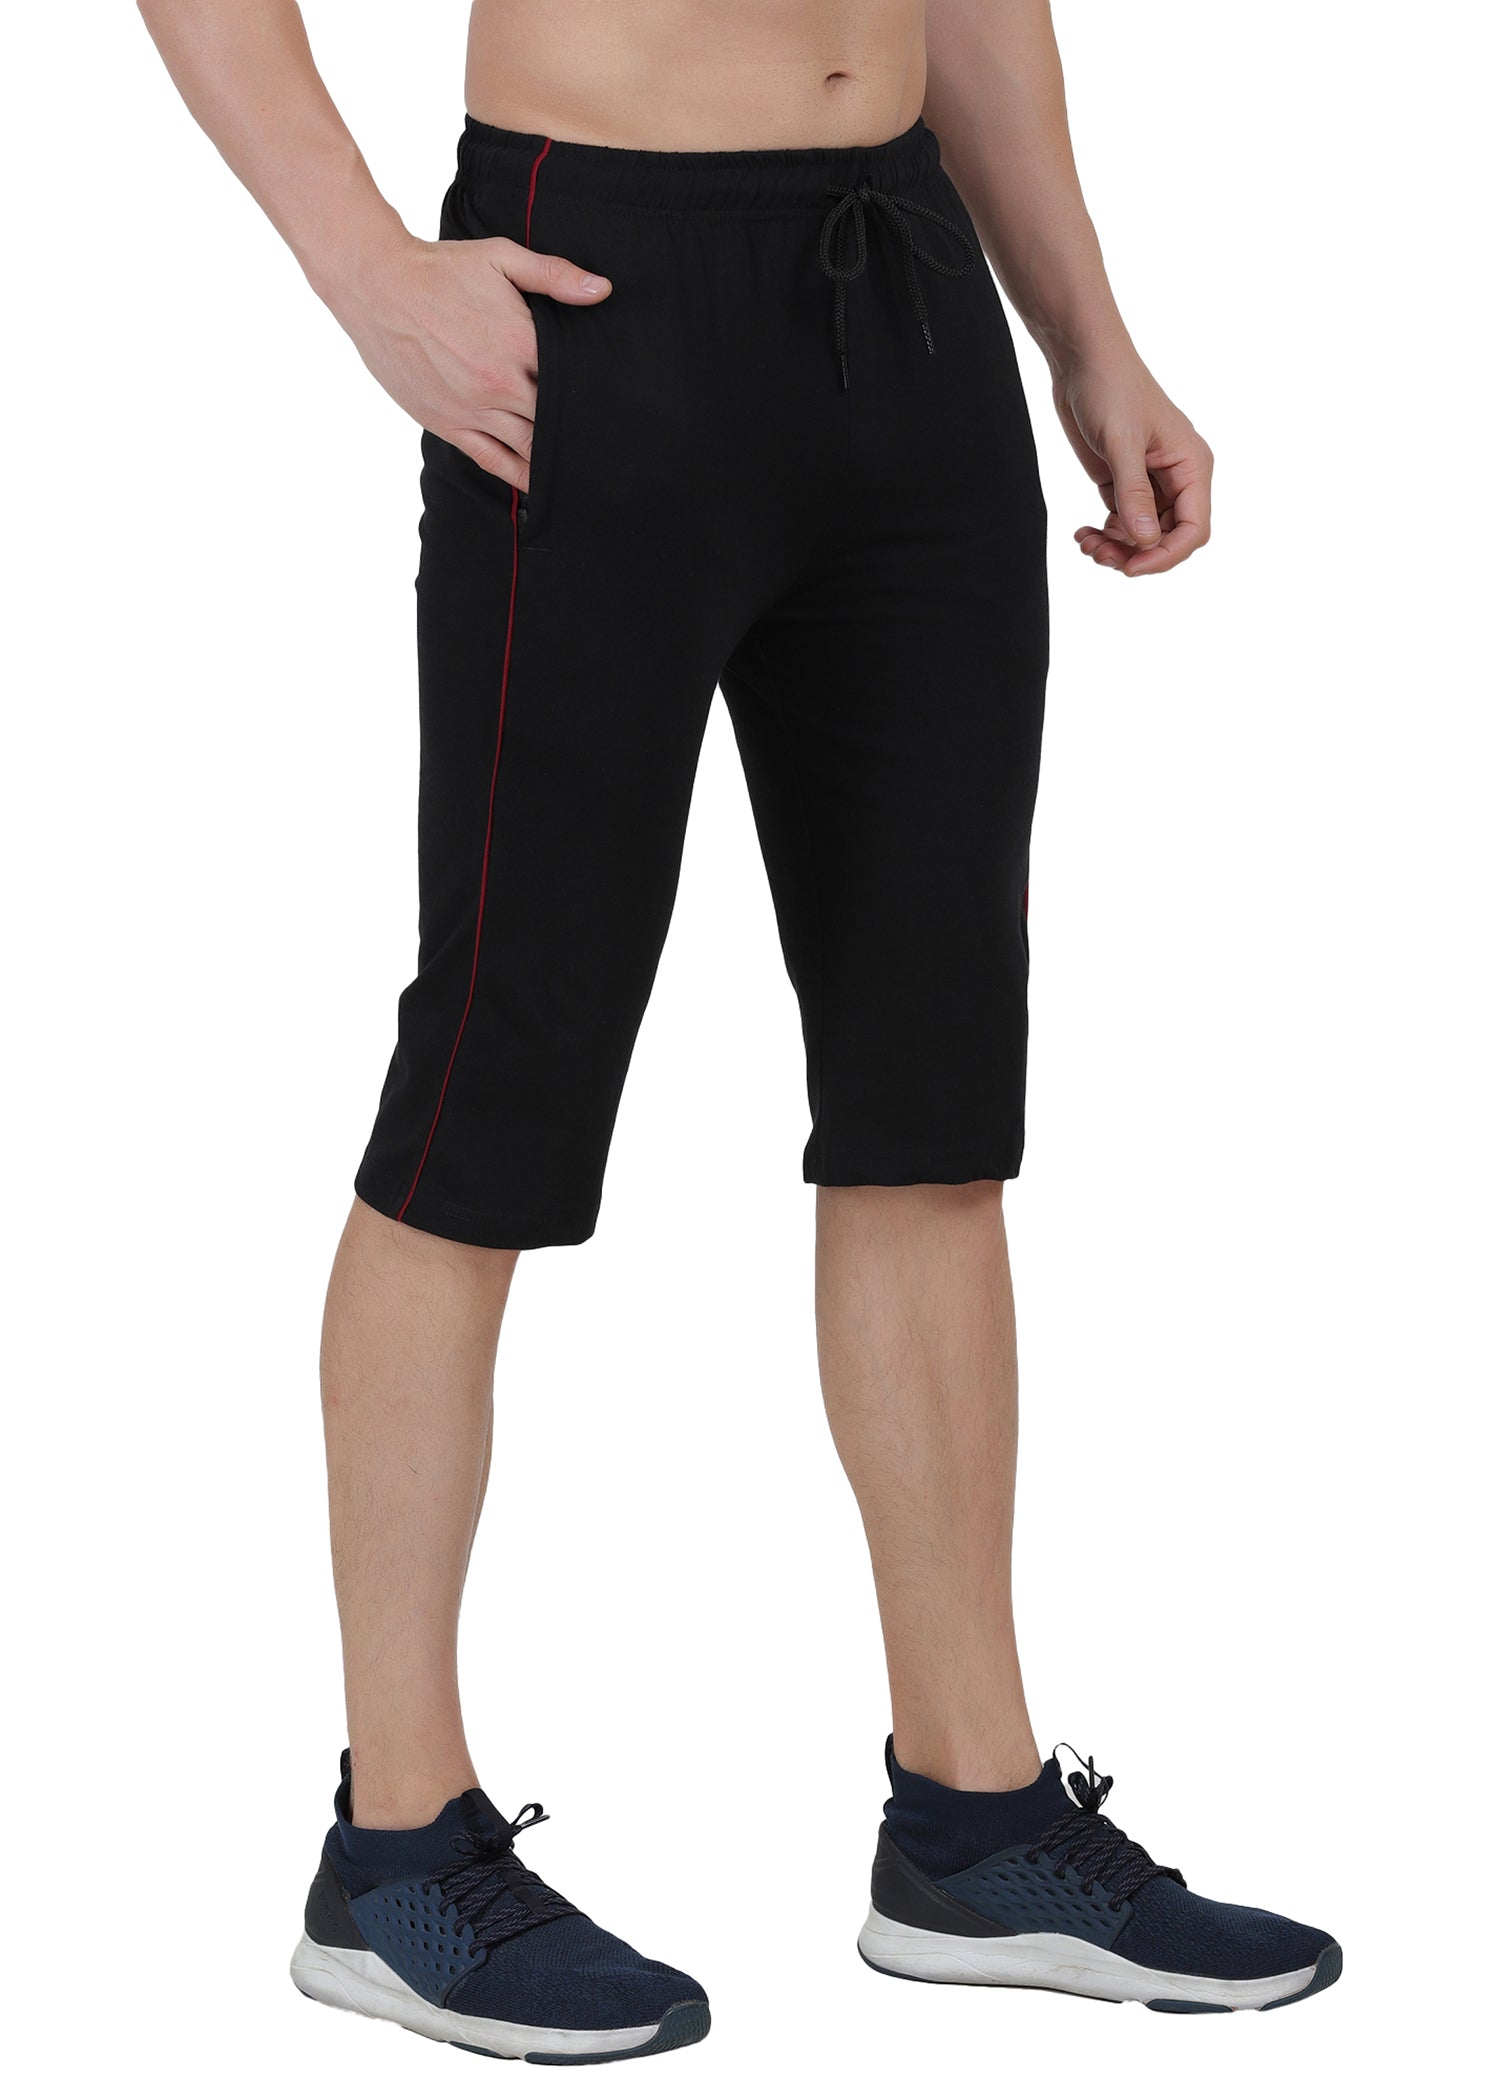 Buy MAGCOMSEN Capri Pants for Men 3/4 Sweatpants Joggers for Men Capri  Shorts Summer Gym Shorts Athletic Shorts Training Shorts Zipper Pockets  Black at Amazon.in